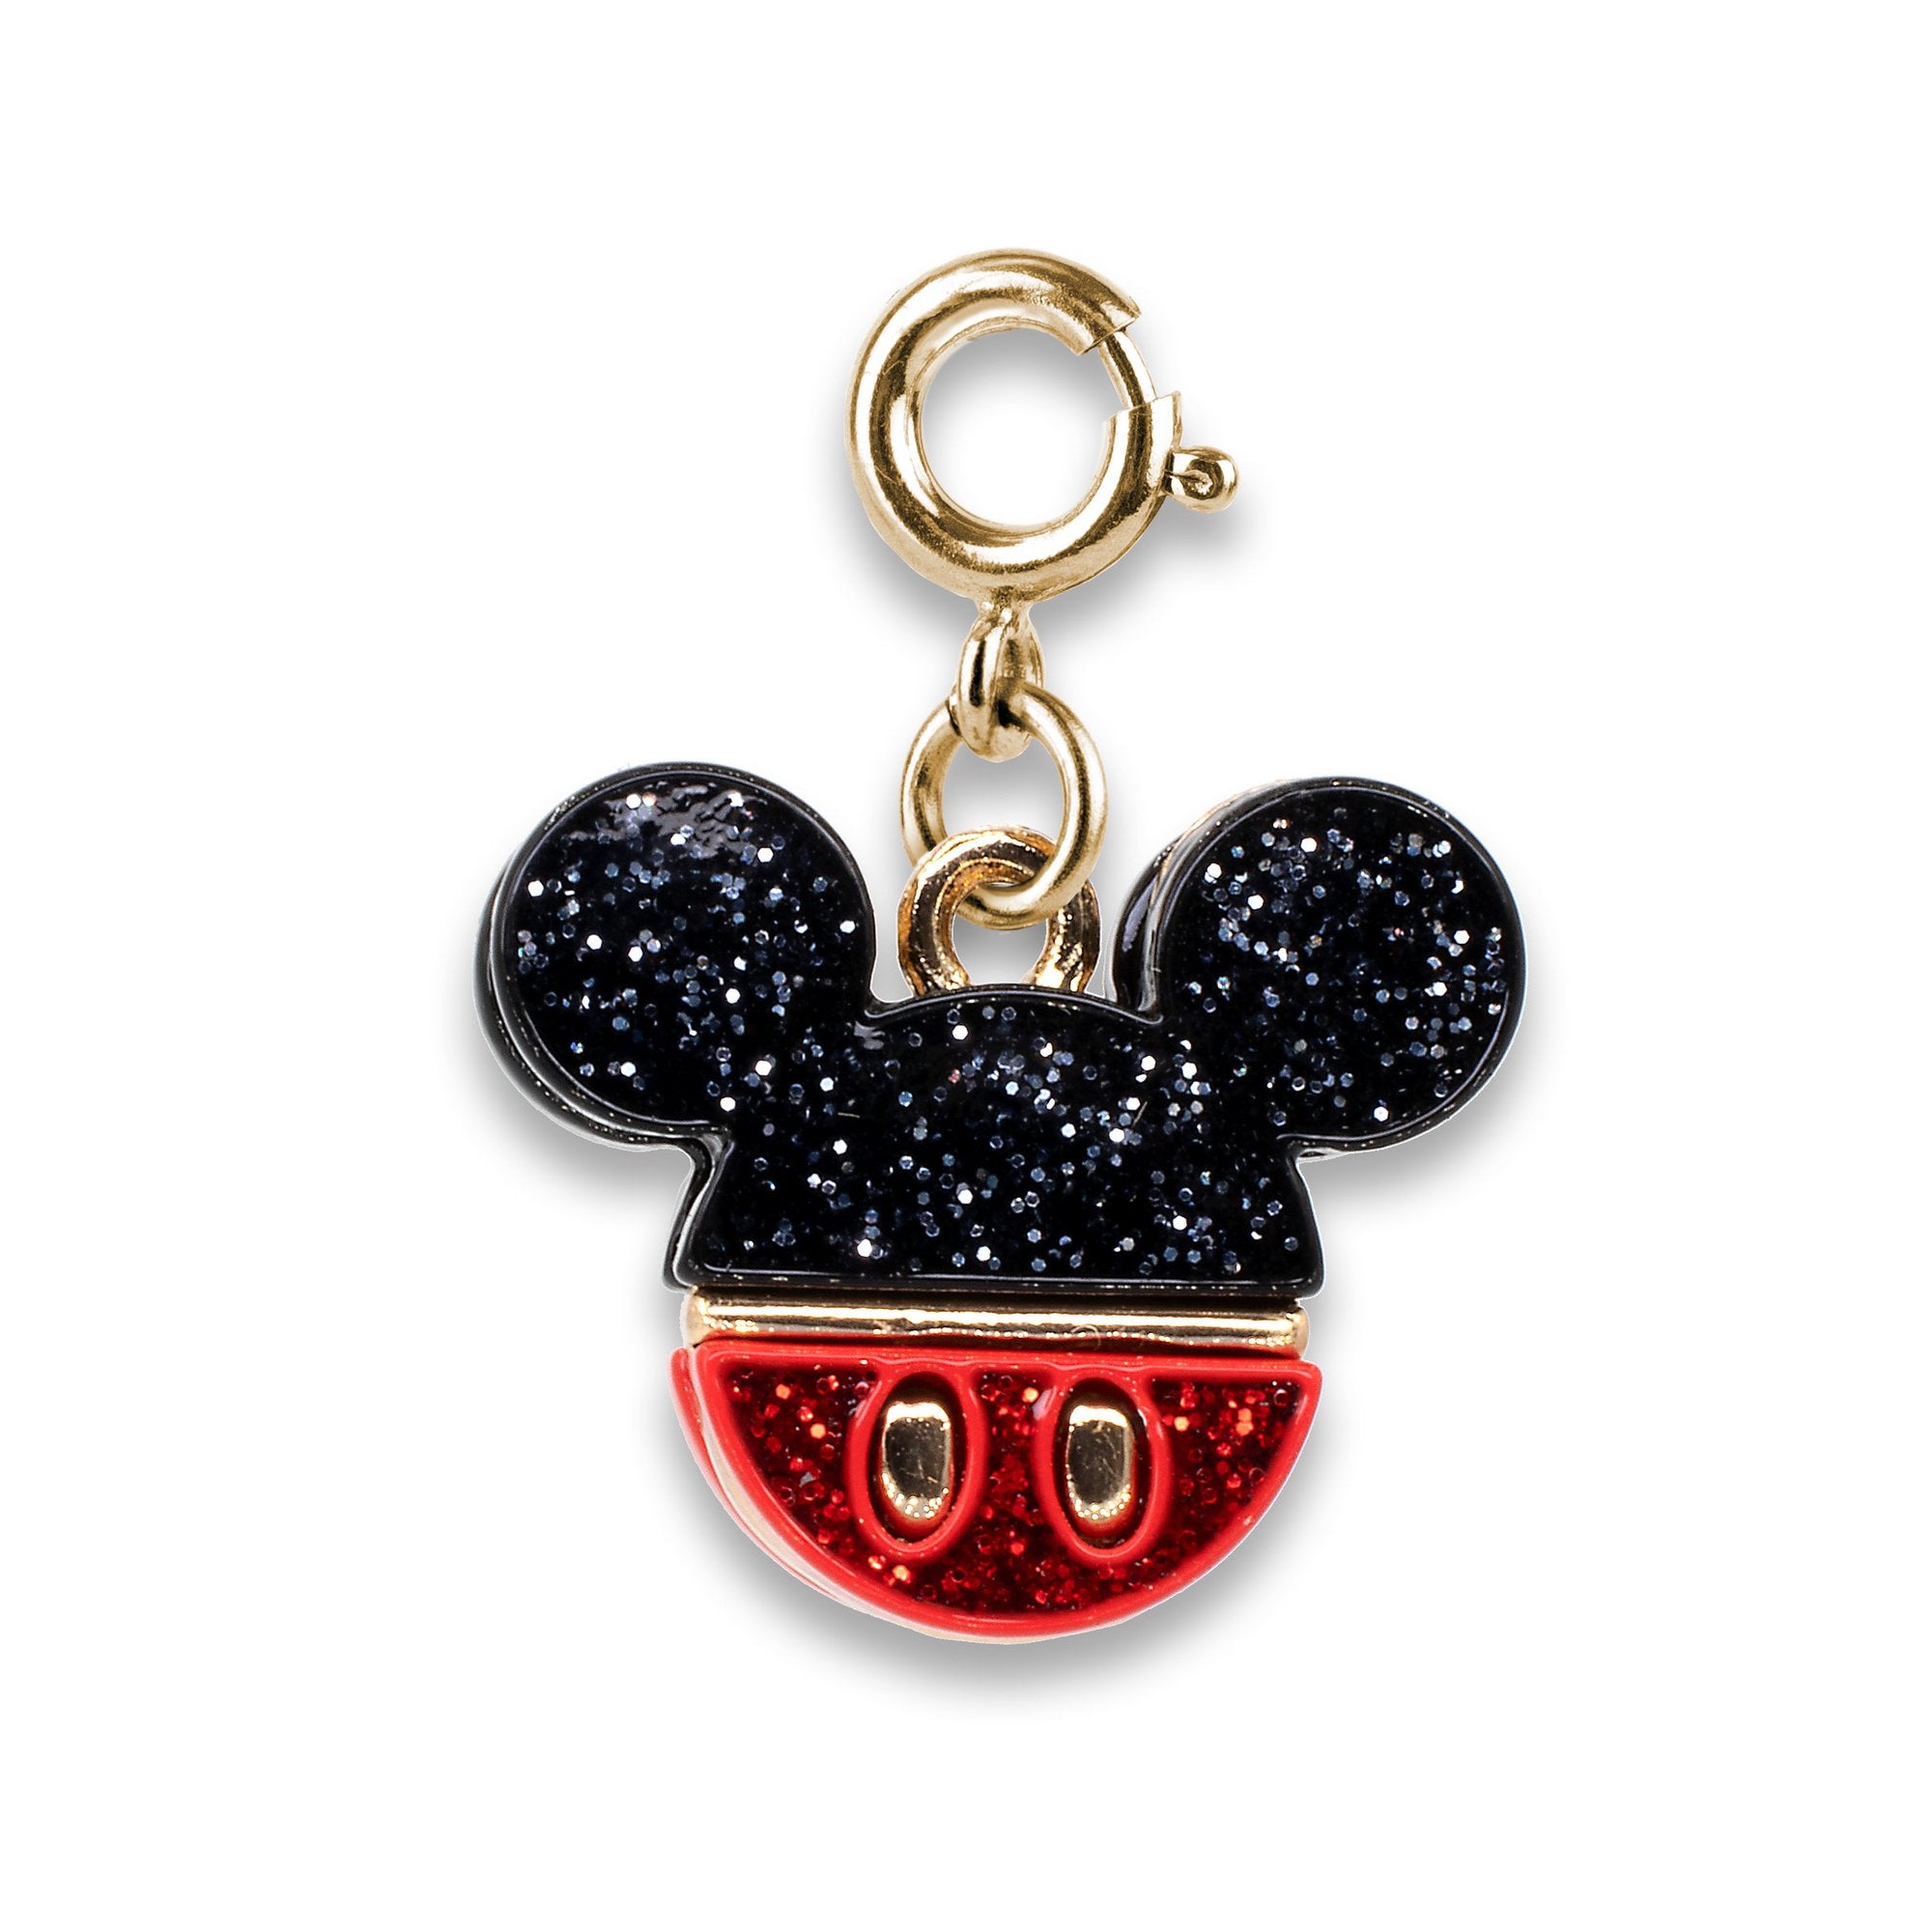 Mickey Mouse Enamel Keychain